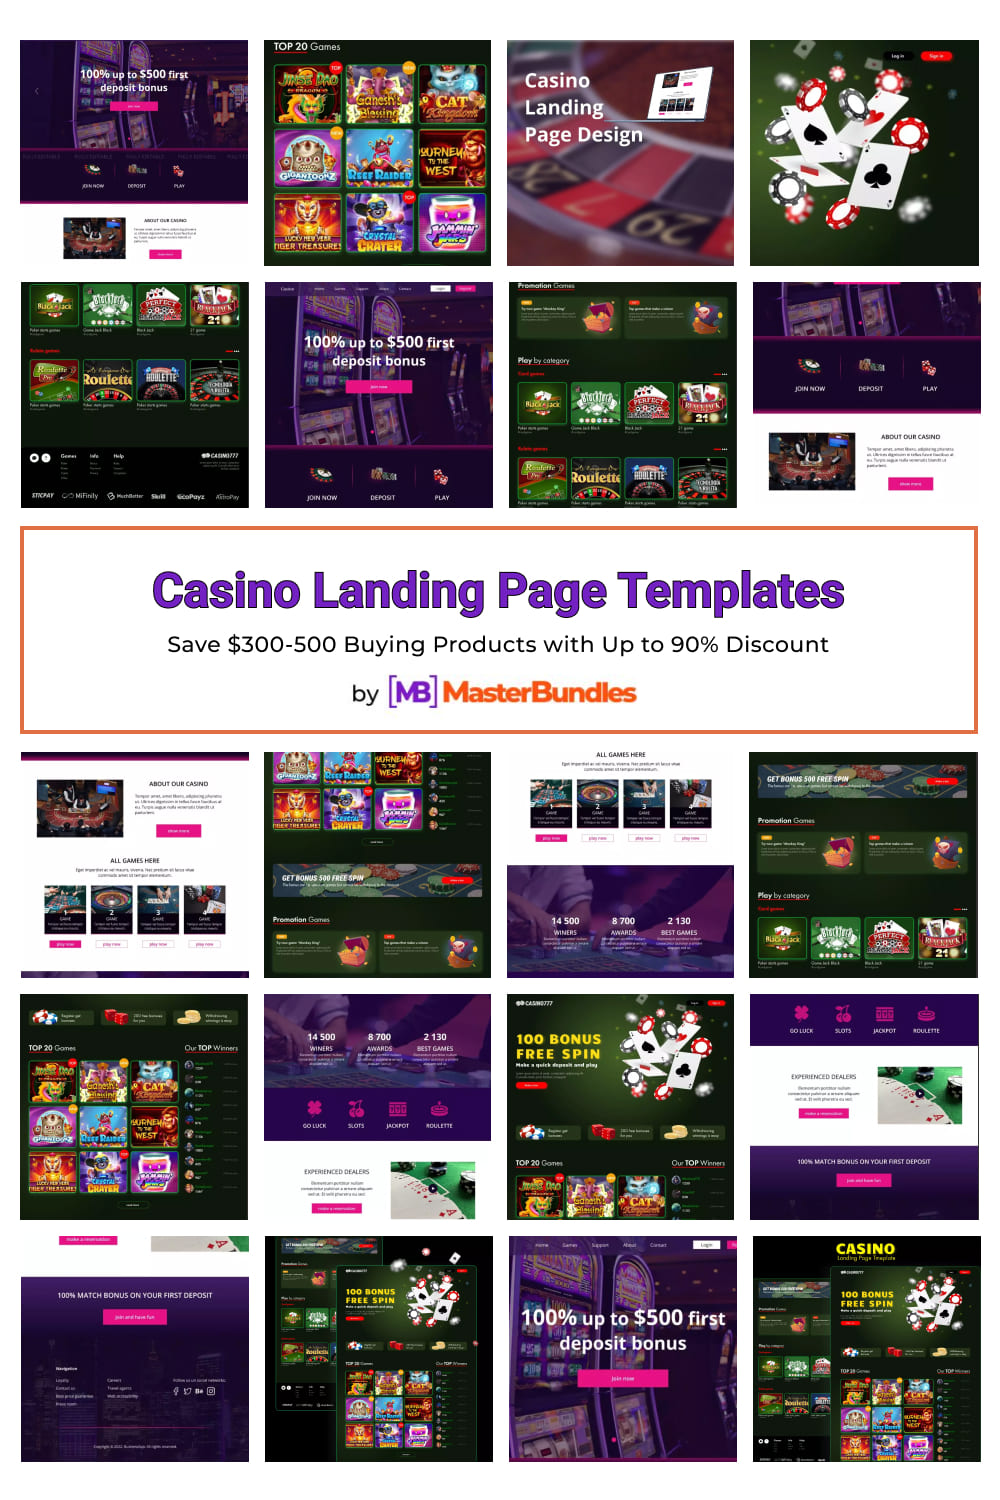 Casino Landing Page Templates Pinterest image.